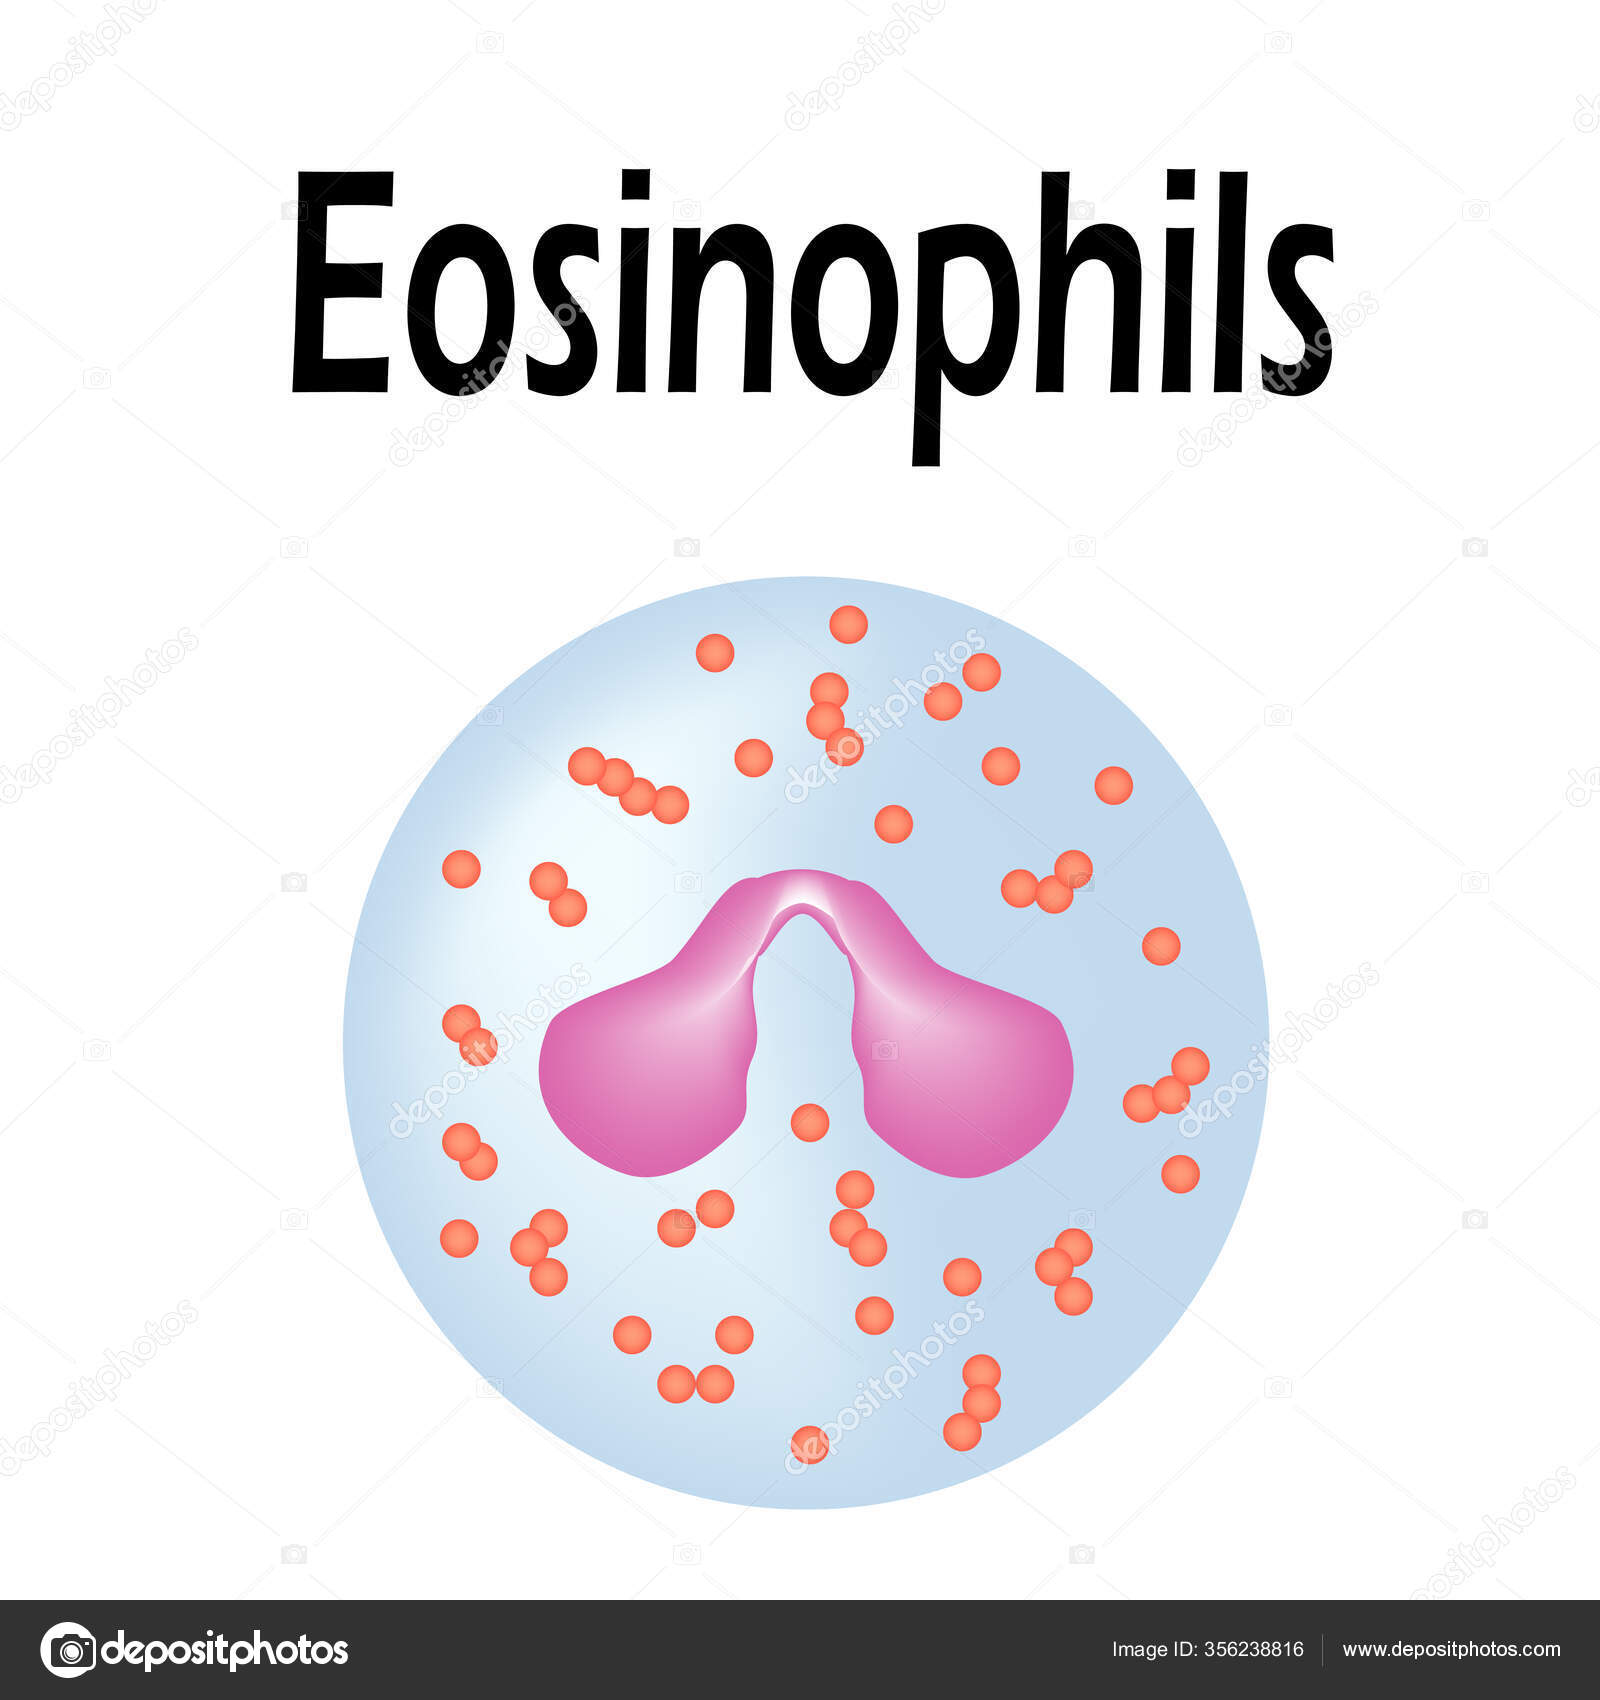 Eosinophils Eosinophilic Asthma: